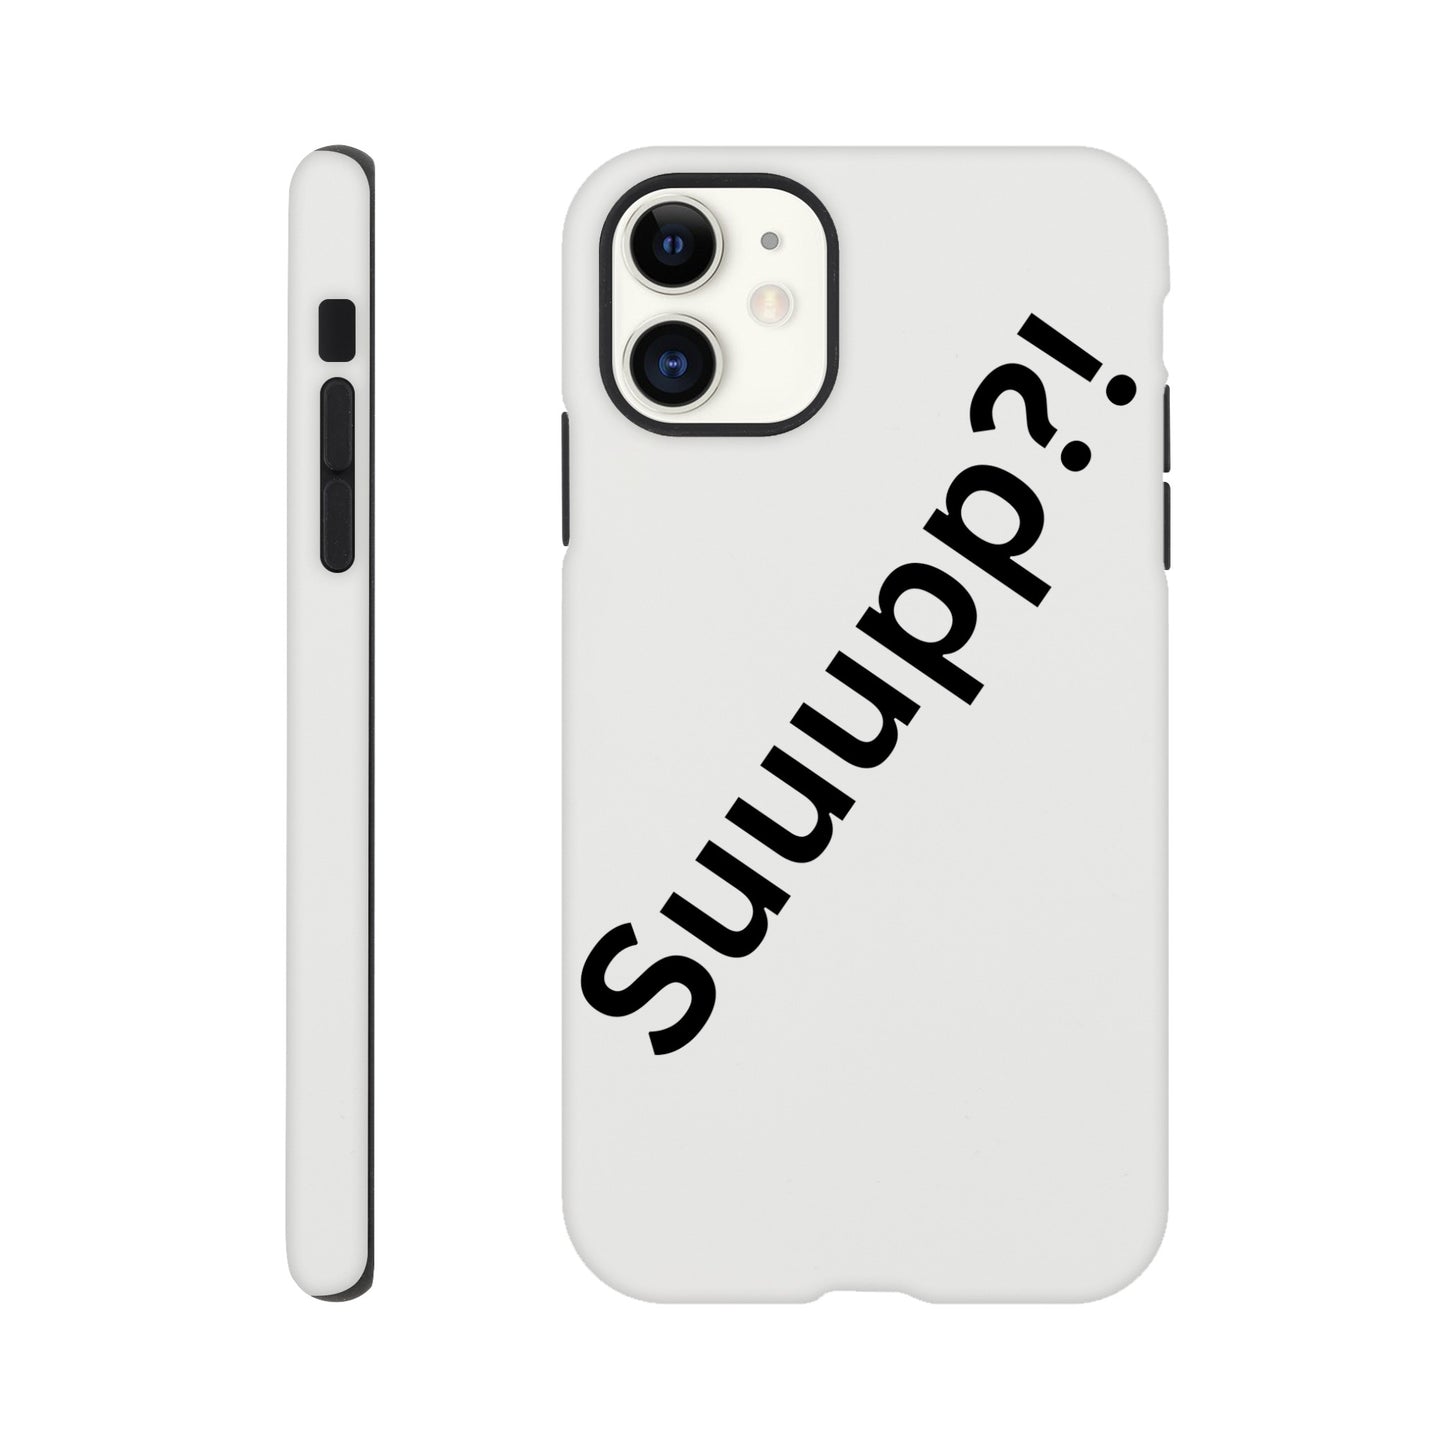 Suuppp Phone cases